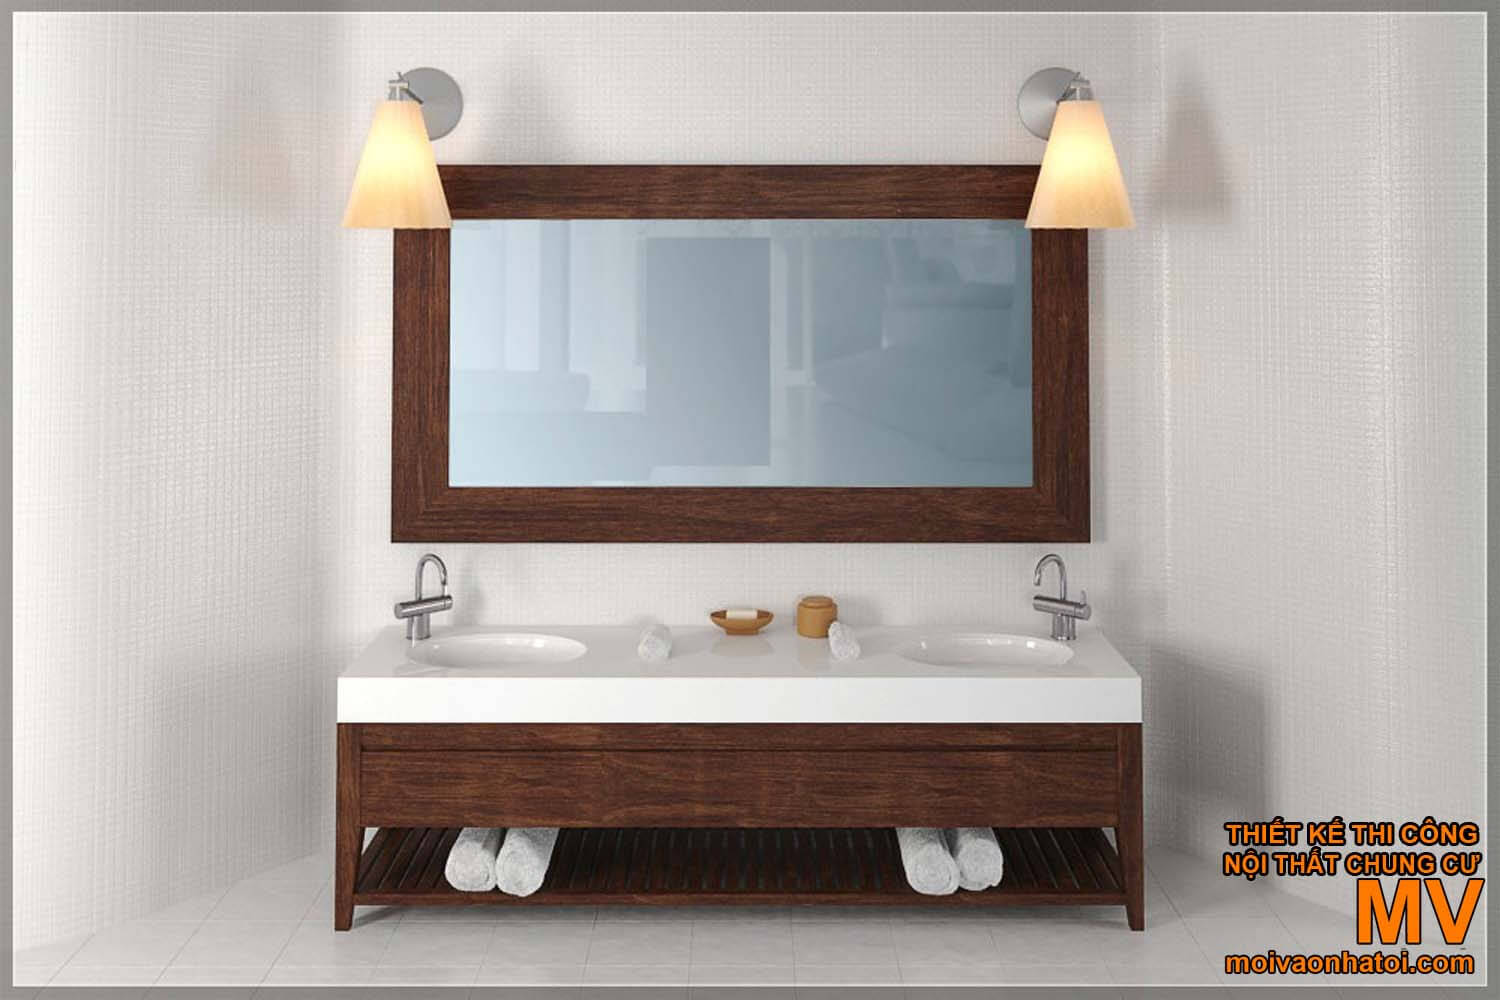 lavabo 세척 얼굴, 아름다운 현대적인 욕실 디자인